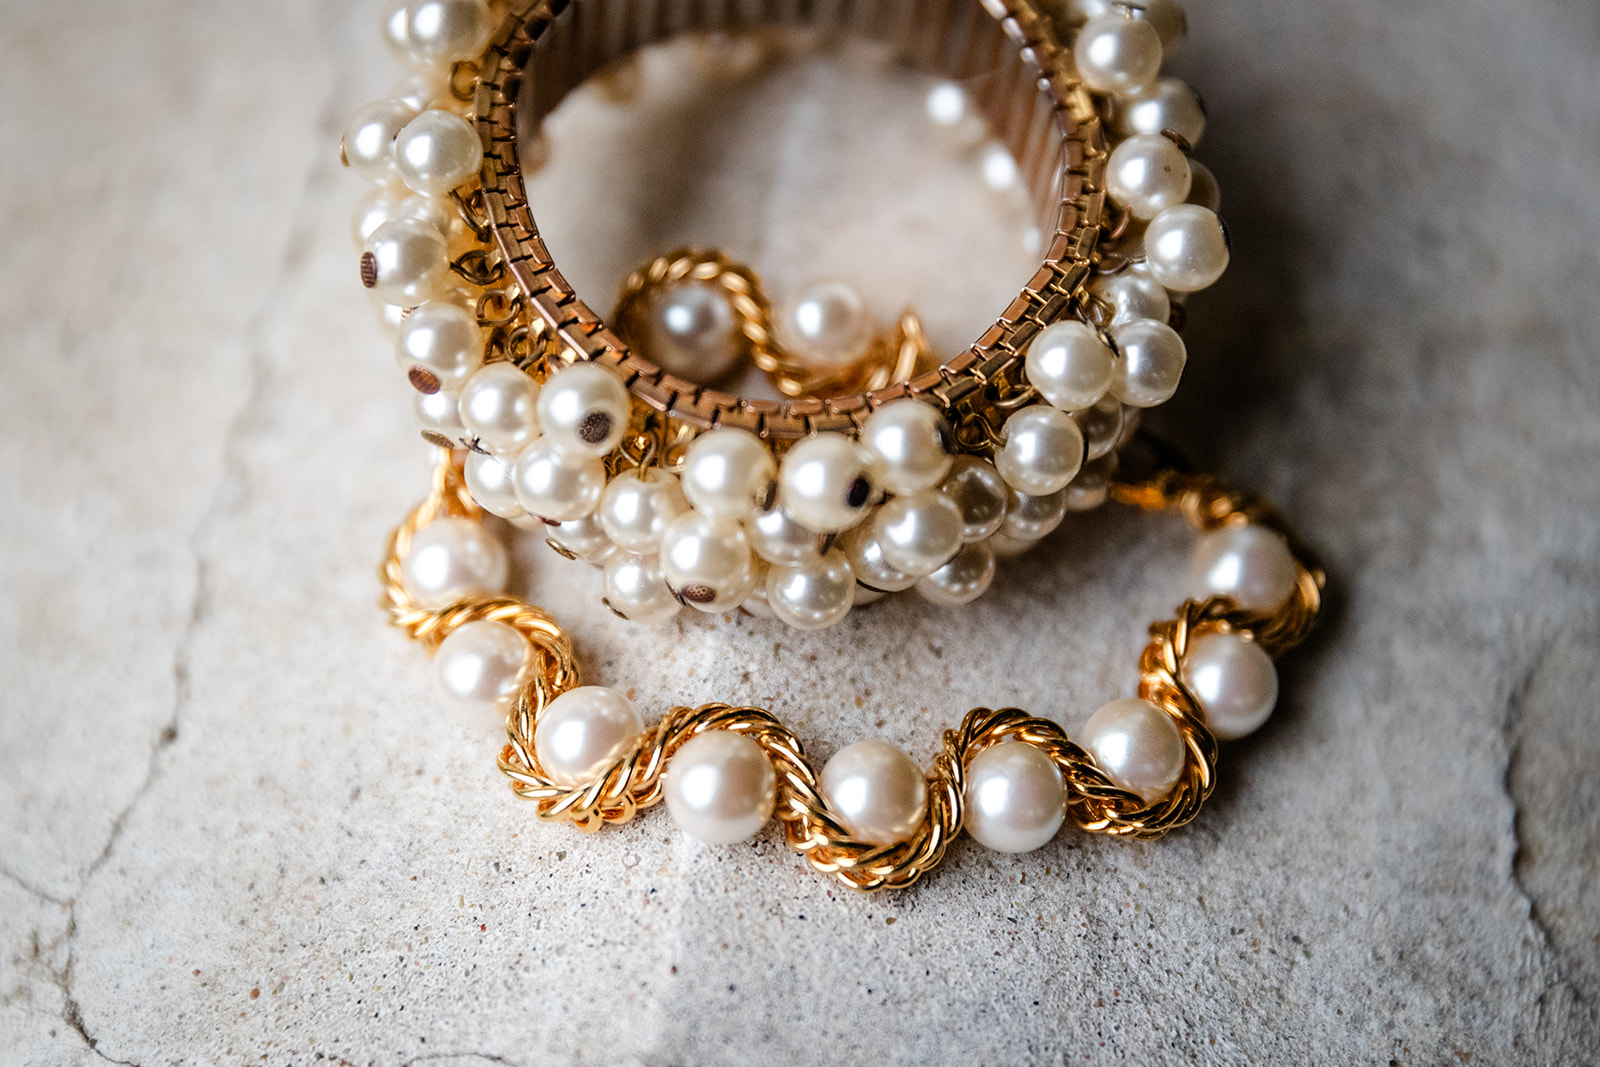 Detail of pearls 